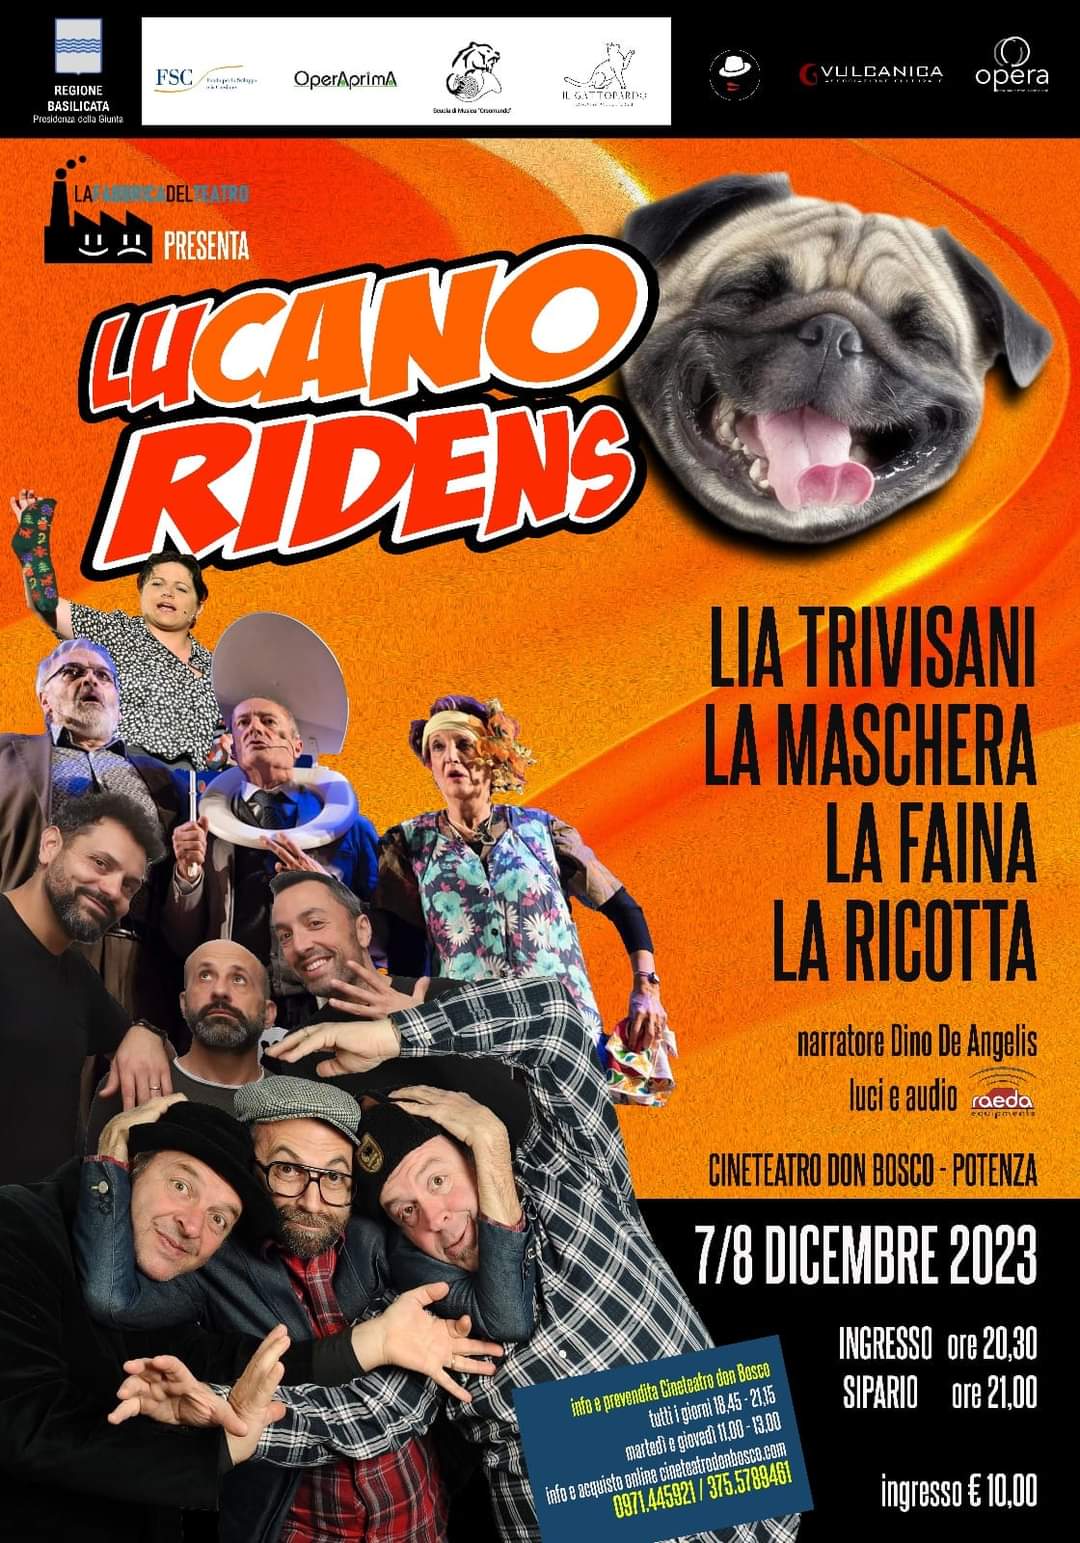 Lucano ridens